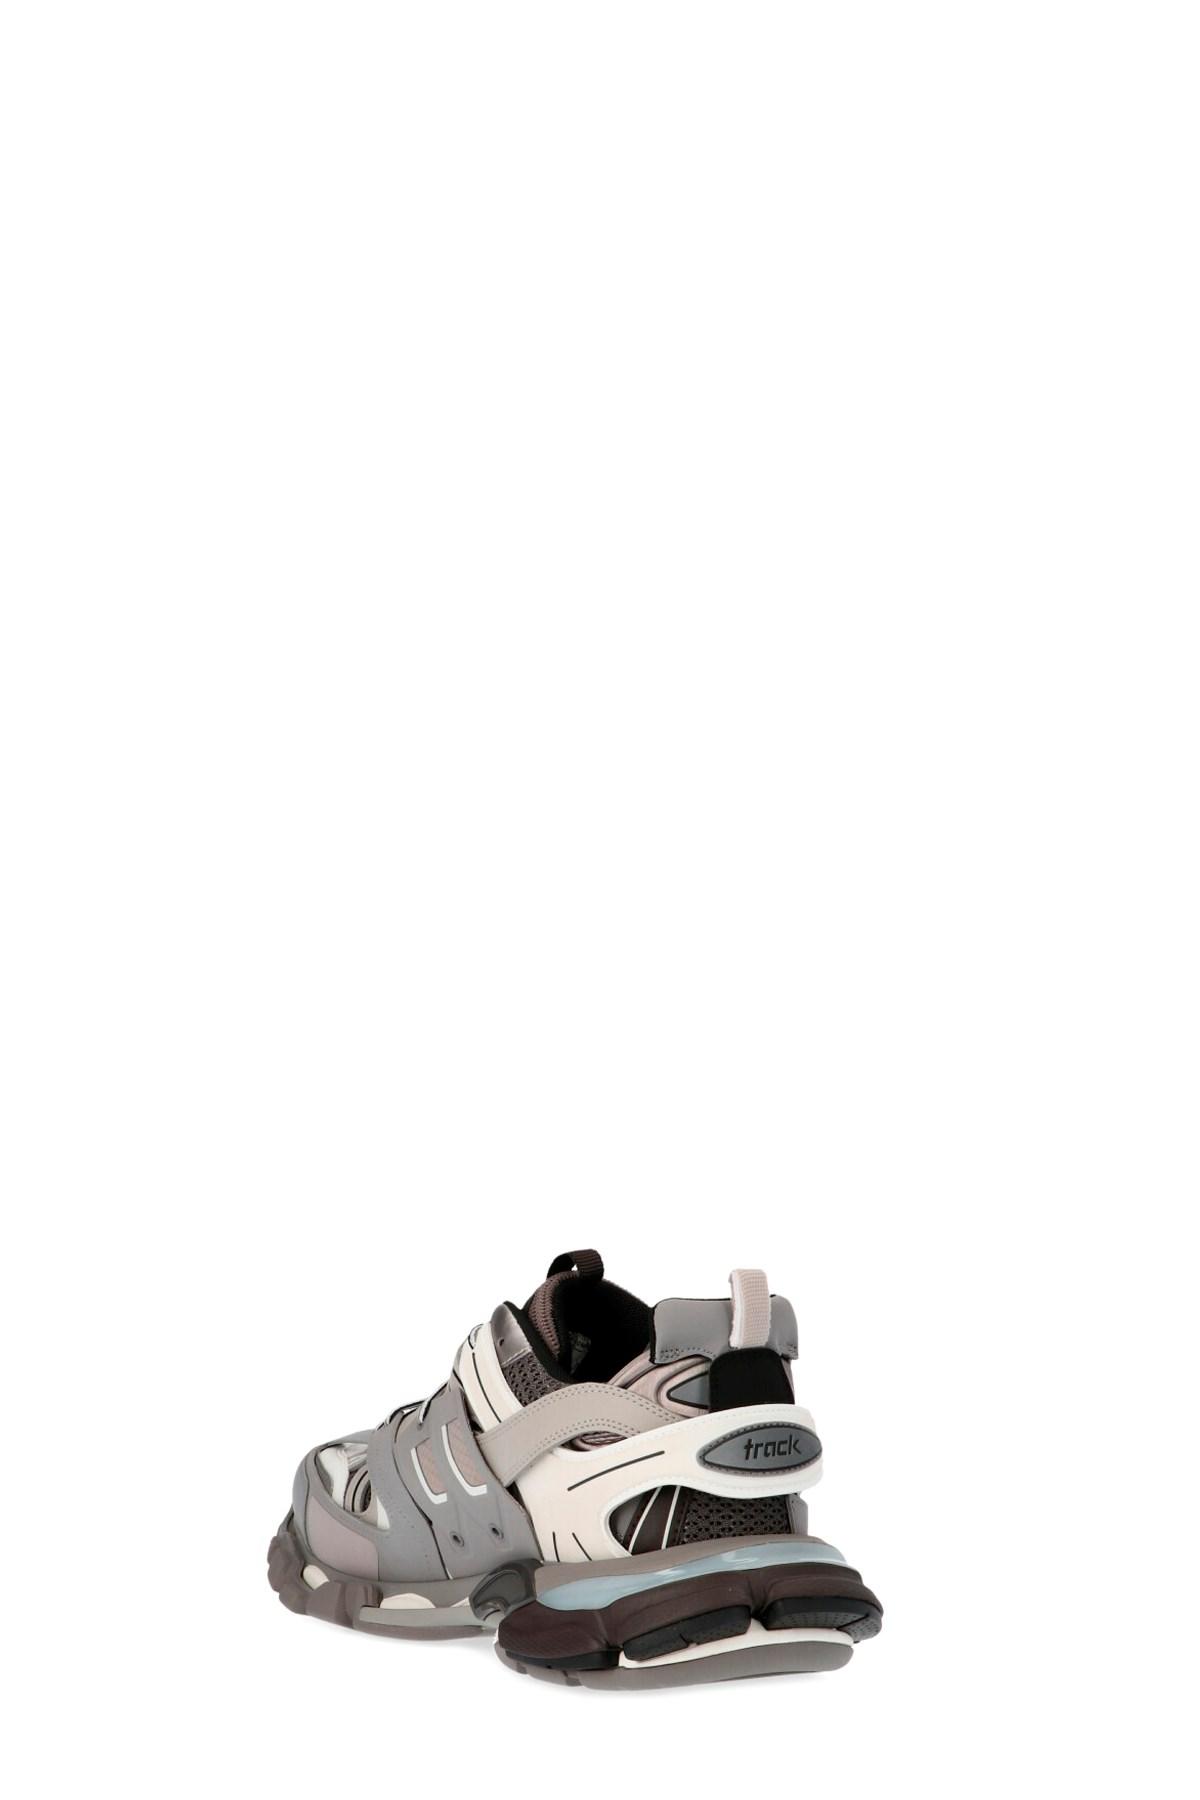 Balenciaga 'track' Sneakers in Grey (Gray) for Men - Lyst